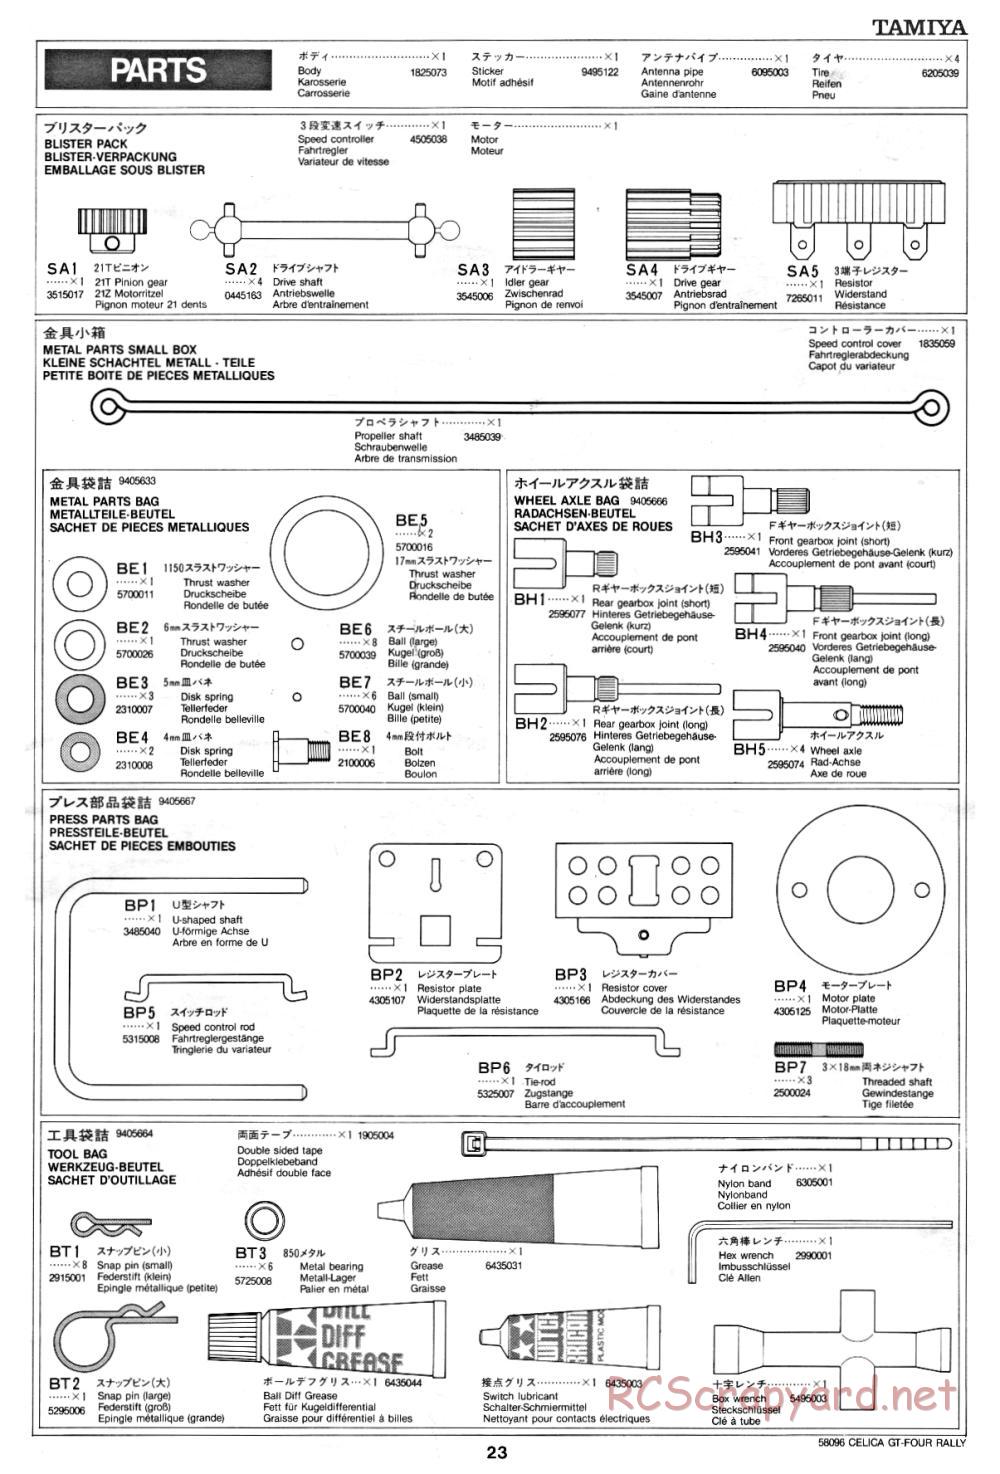 Tamiya - Toyota Celica GT-Four Rally - 58096 - Manual - Page 23